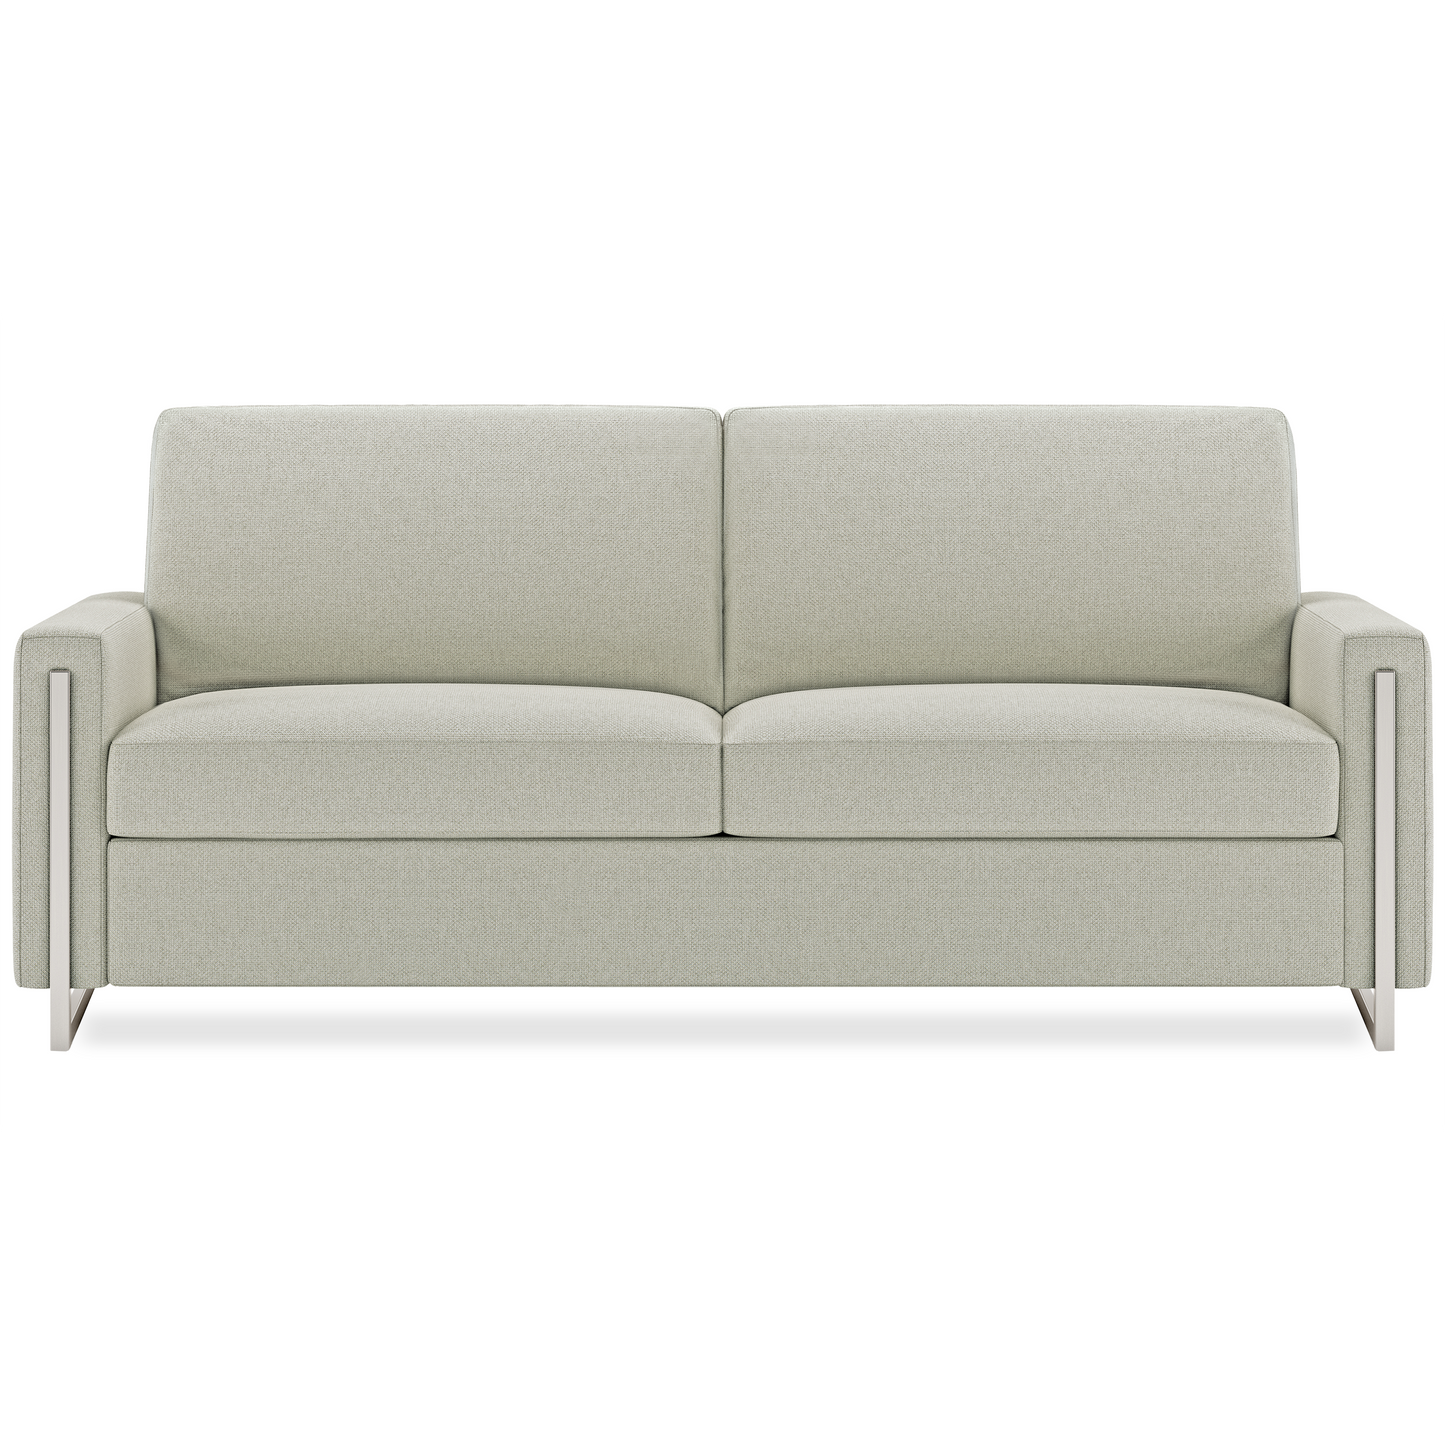 American Leather Comfort Sleeper - Sulley - Best Sofa Sleeper